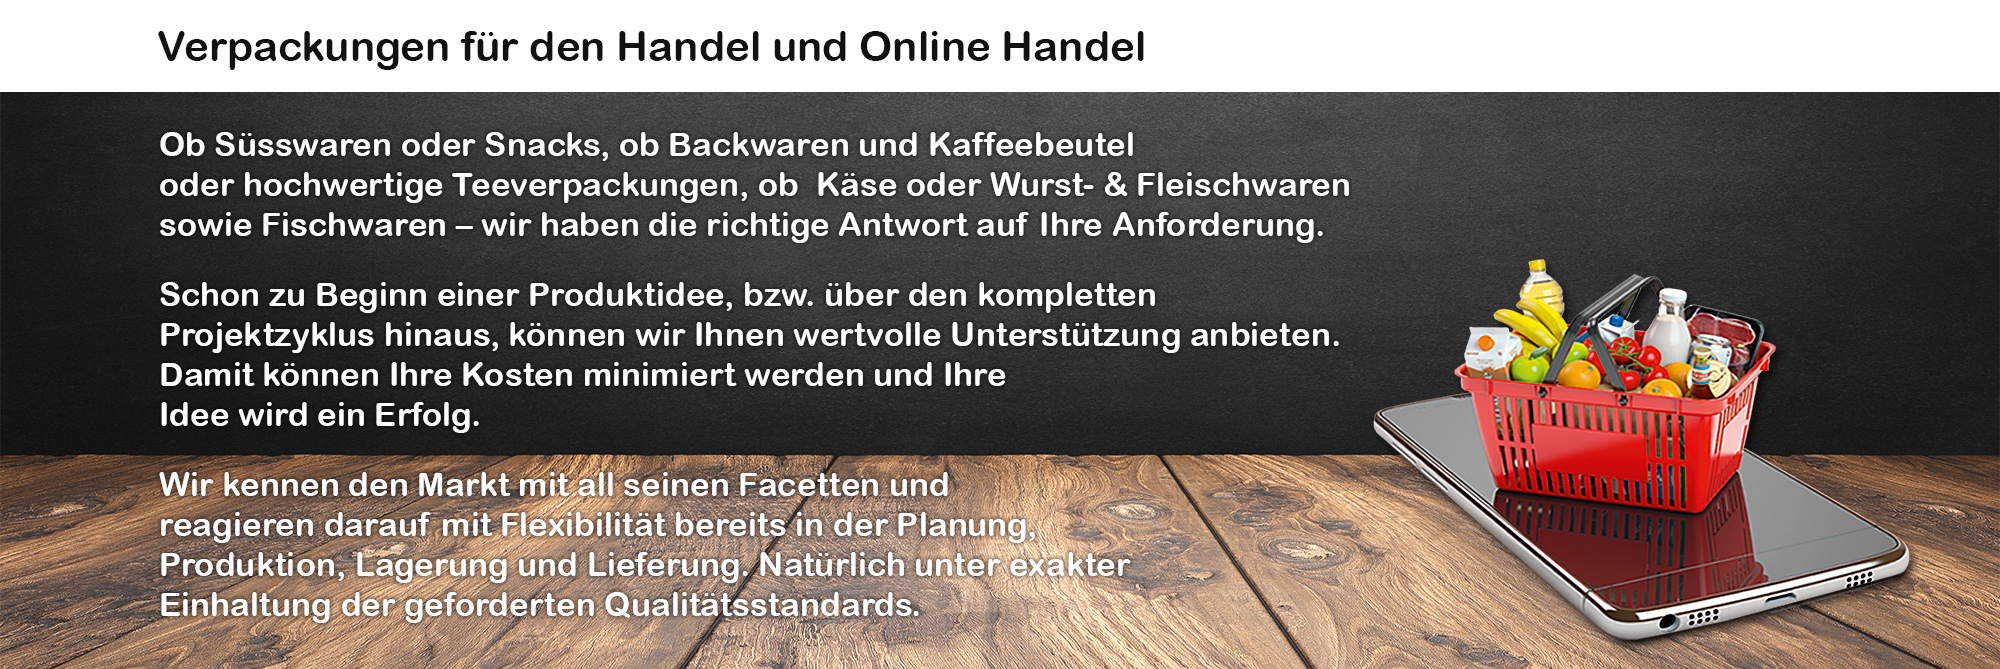 Austria Packaging Solution Online Handel